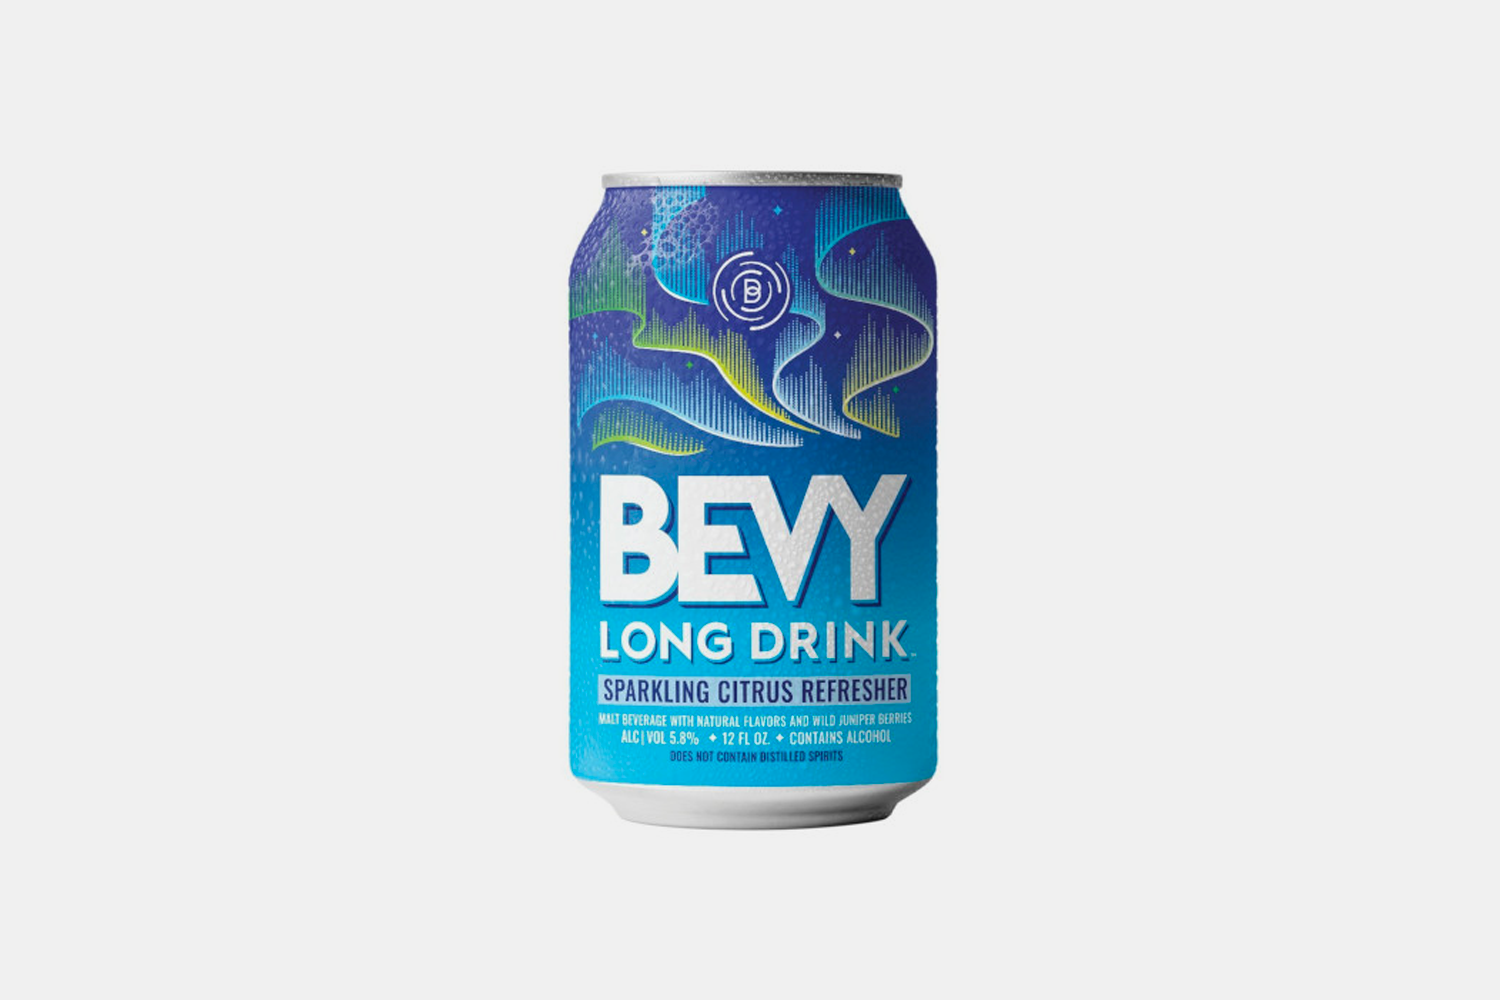 Long drink Bevy